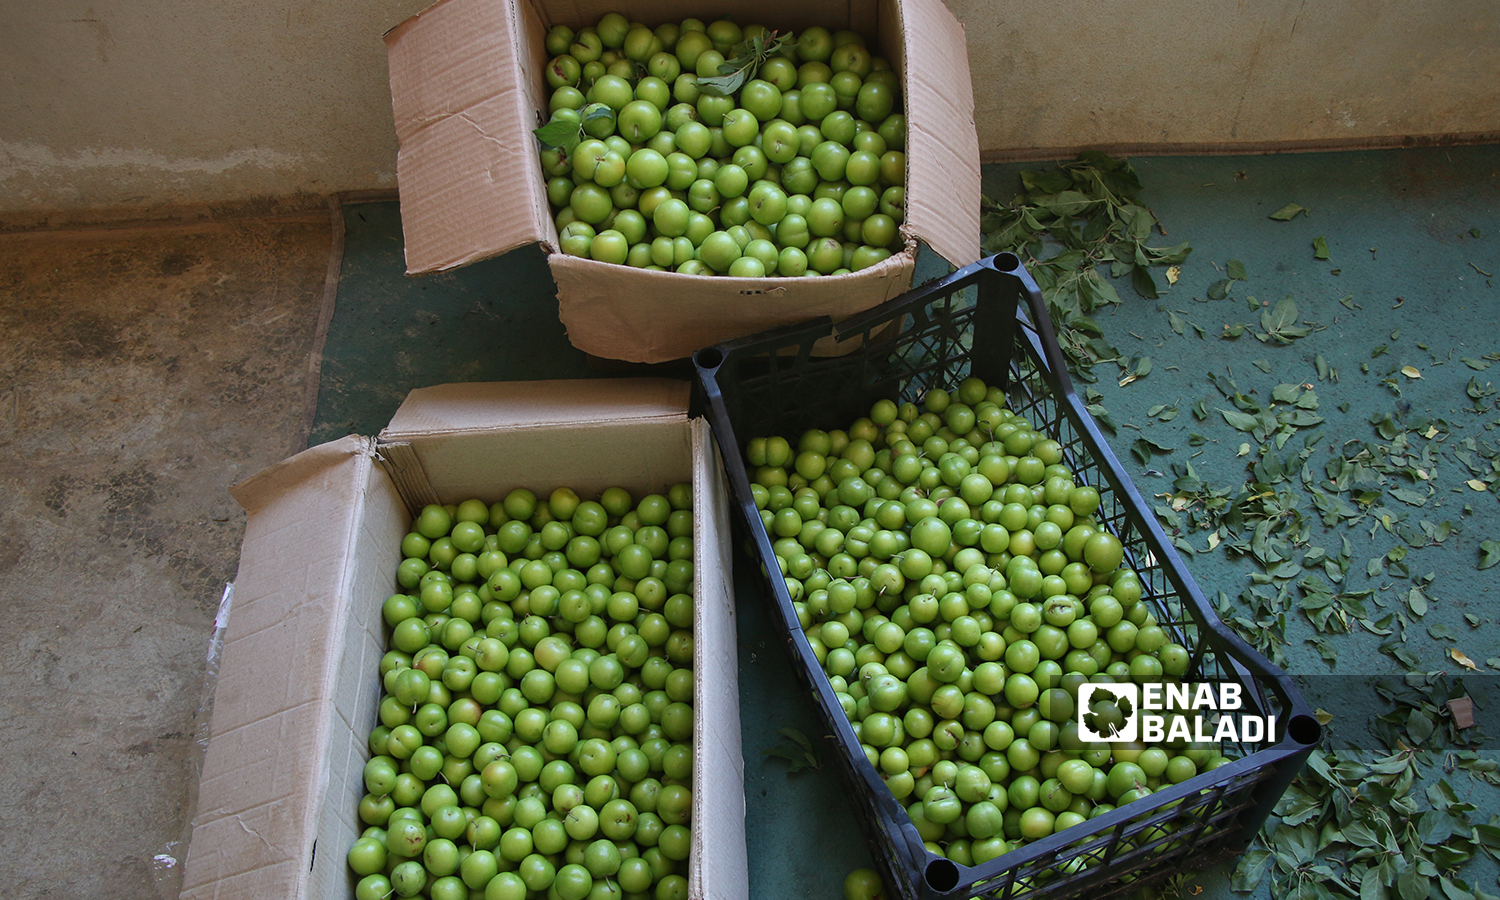 Green plums harvested from Darkush farmlands near the Orontes River Basin in northwestern Syria - 21 May 2022 (Enab Baladi)